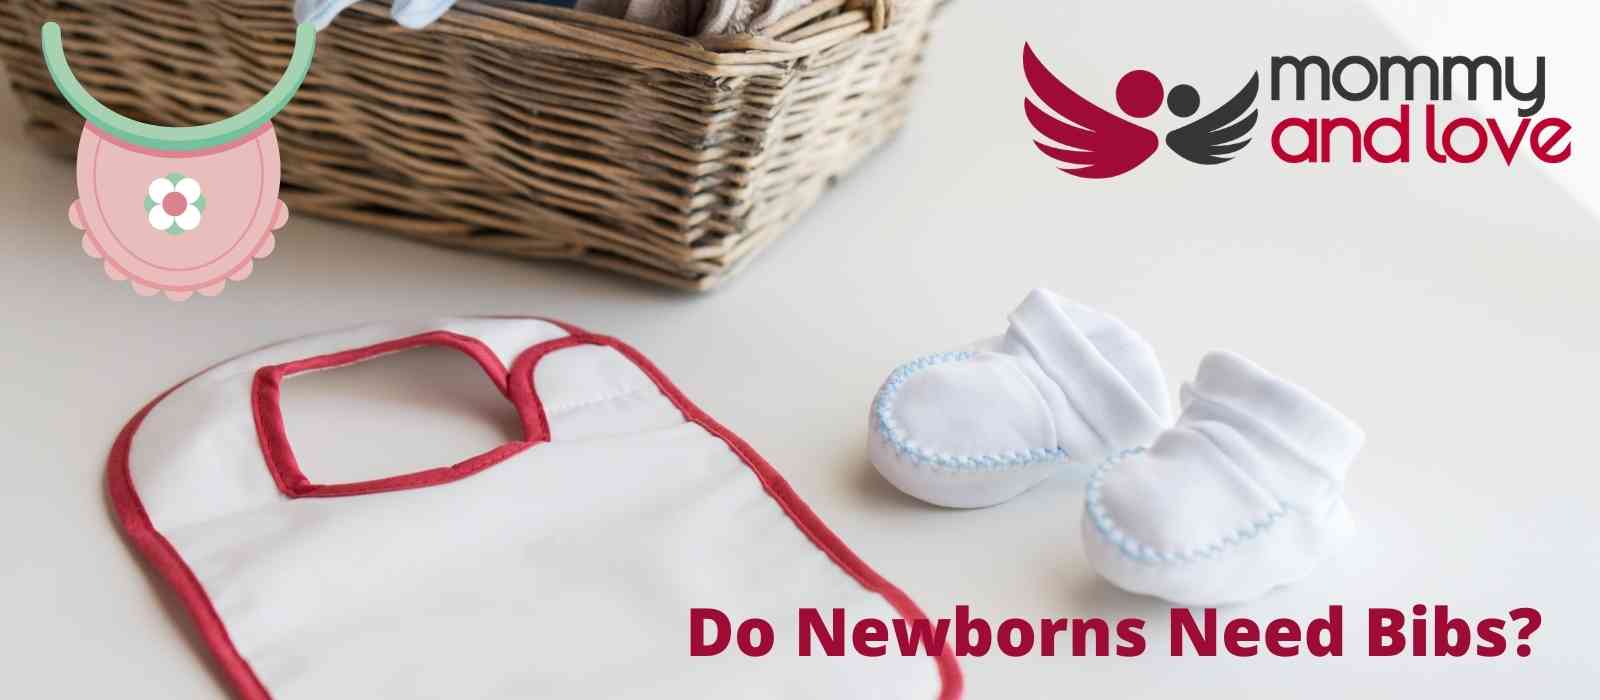 Do Newborns Need Bibs